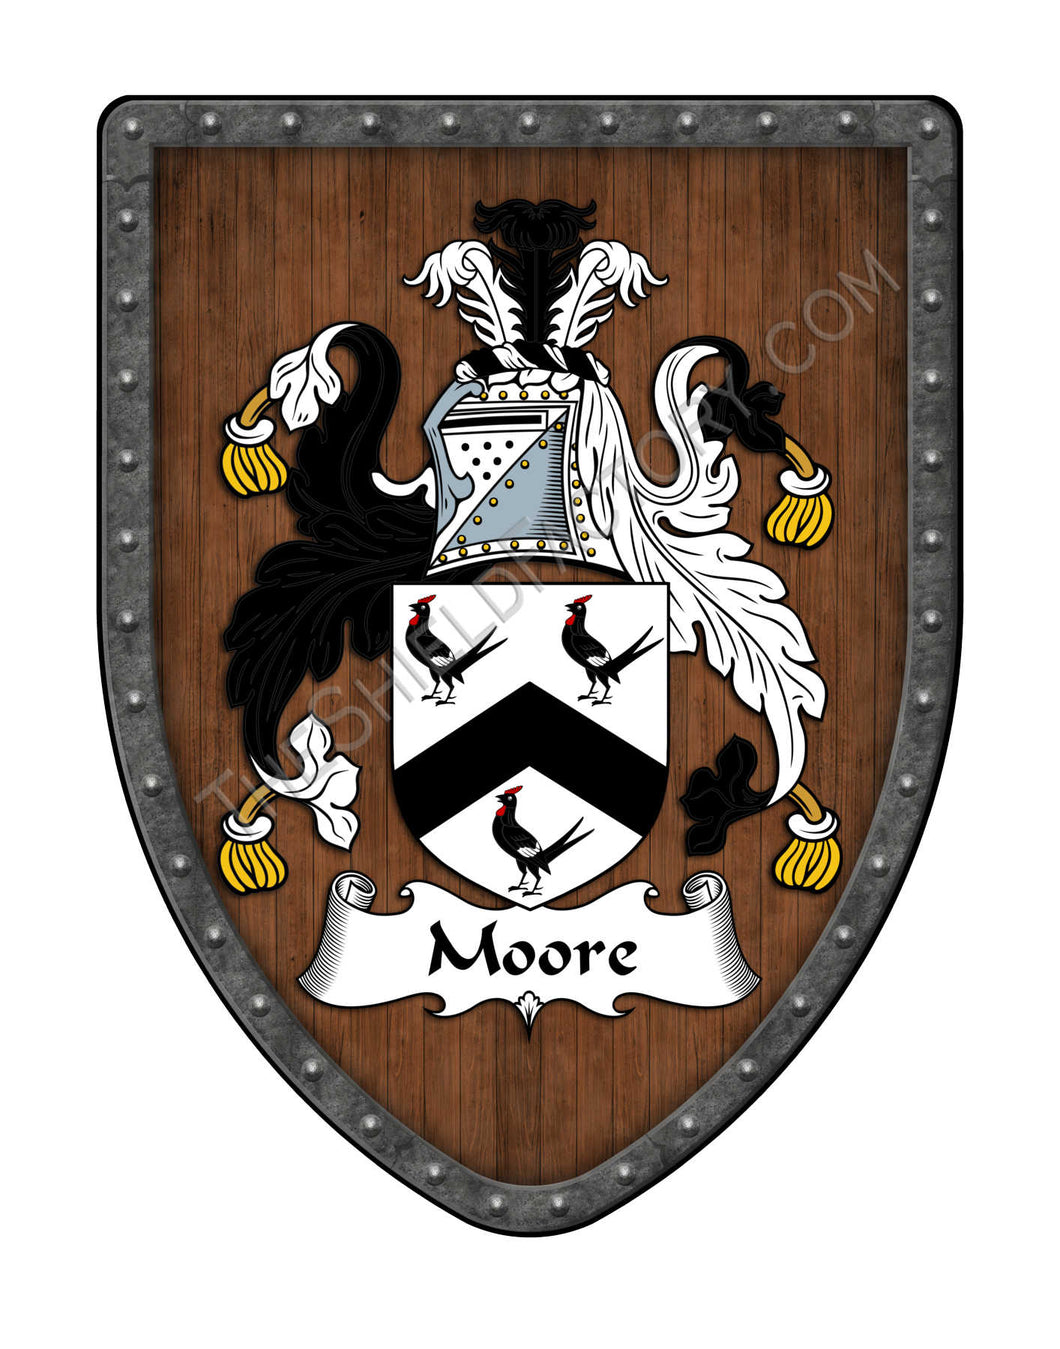 Moore II Coat of Arms